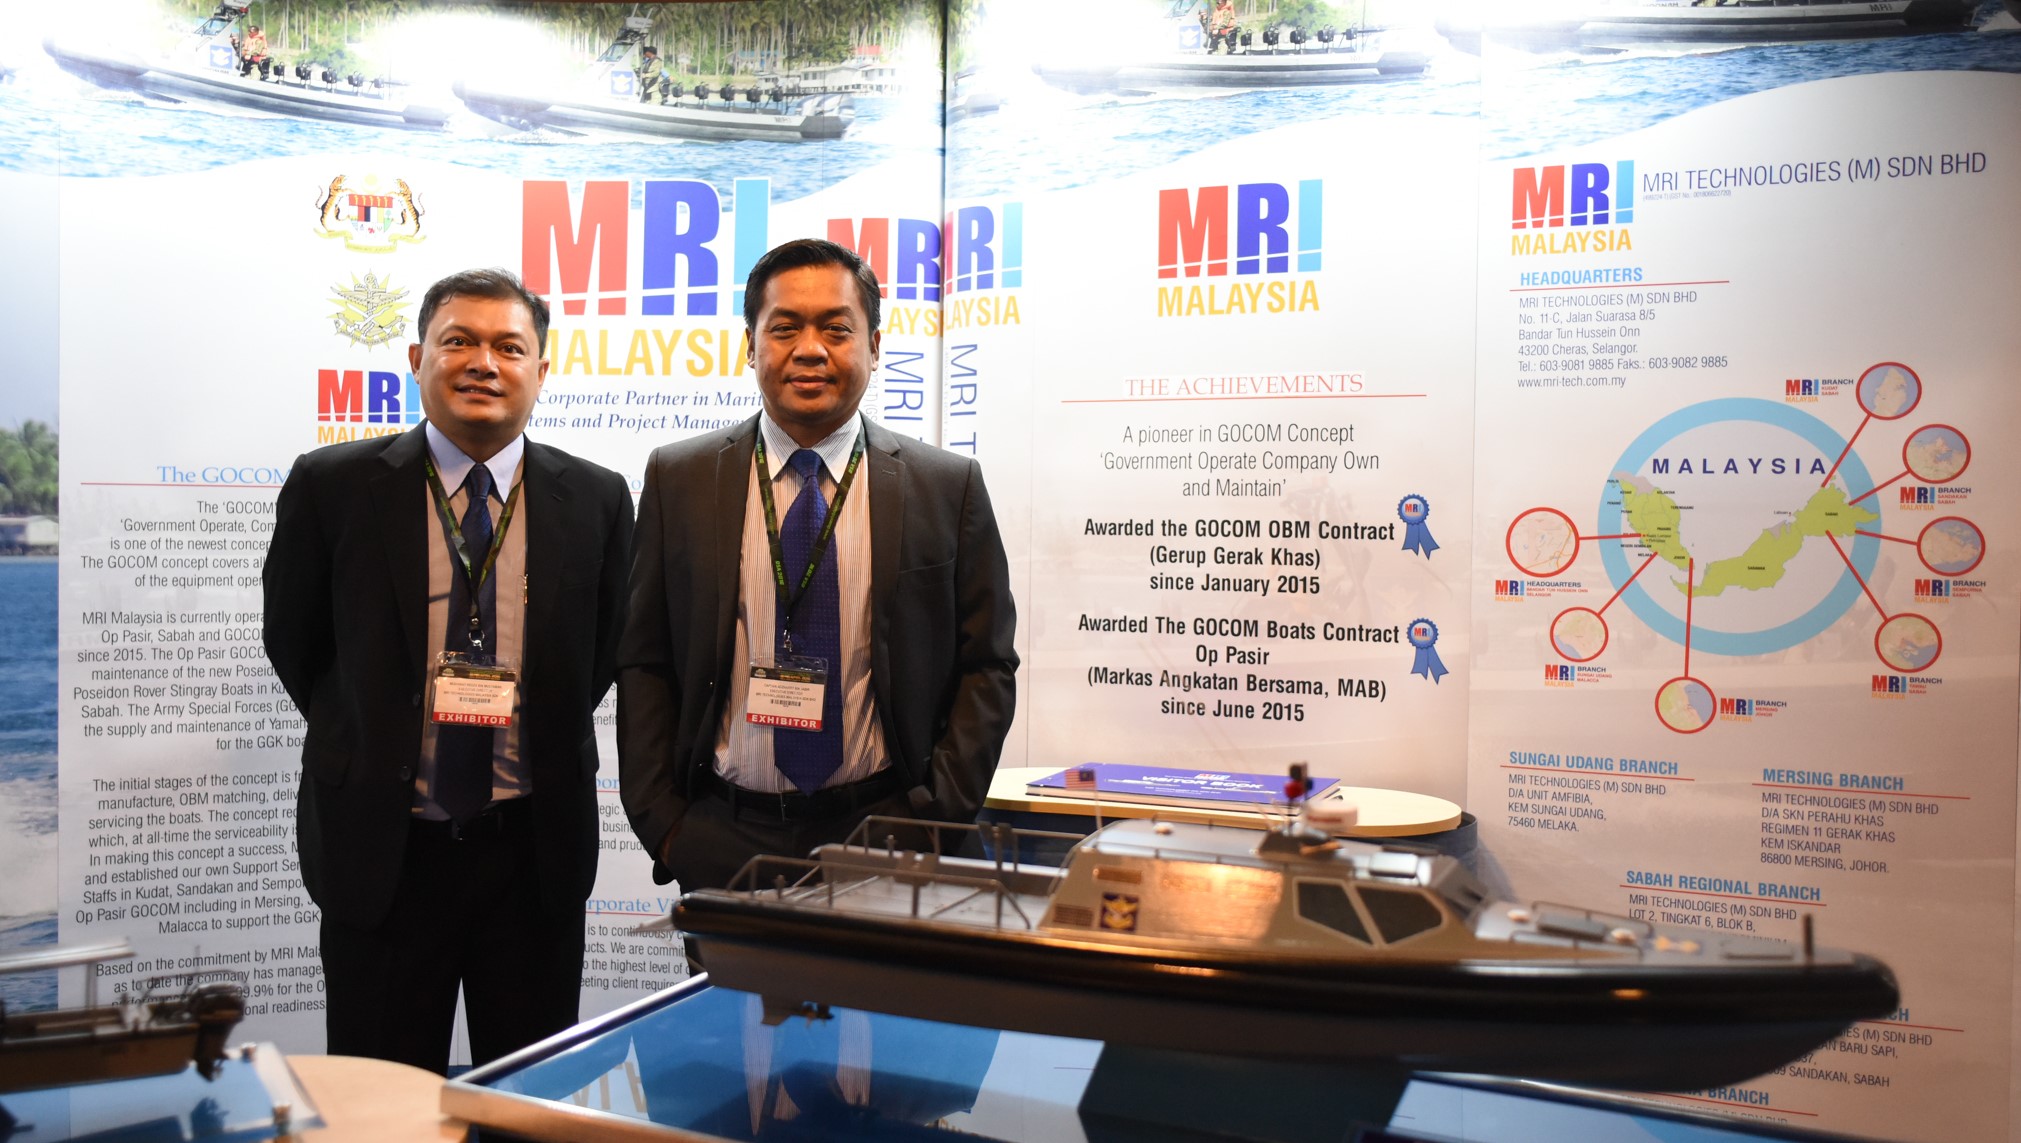 Founders of MRI Technologies (M) Sdn Bhd